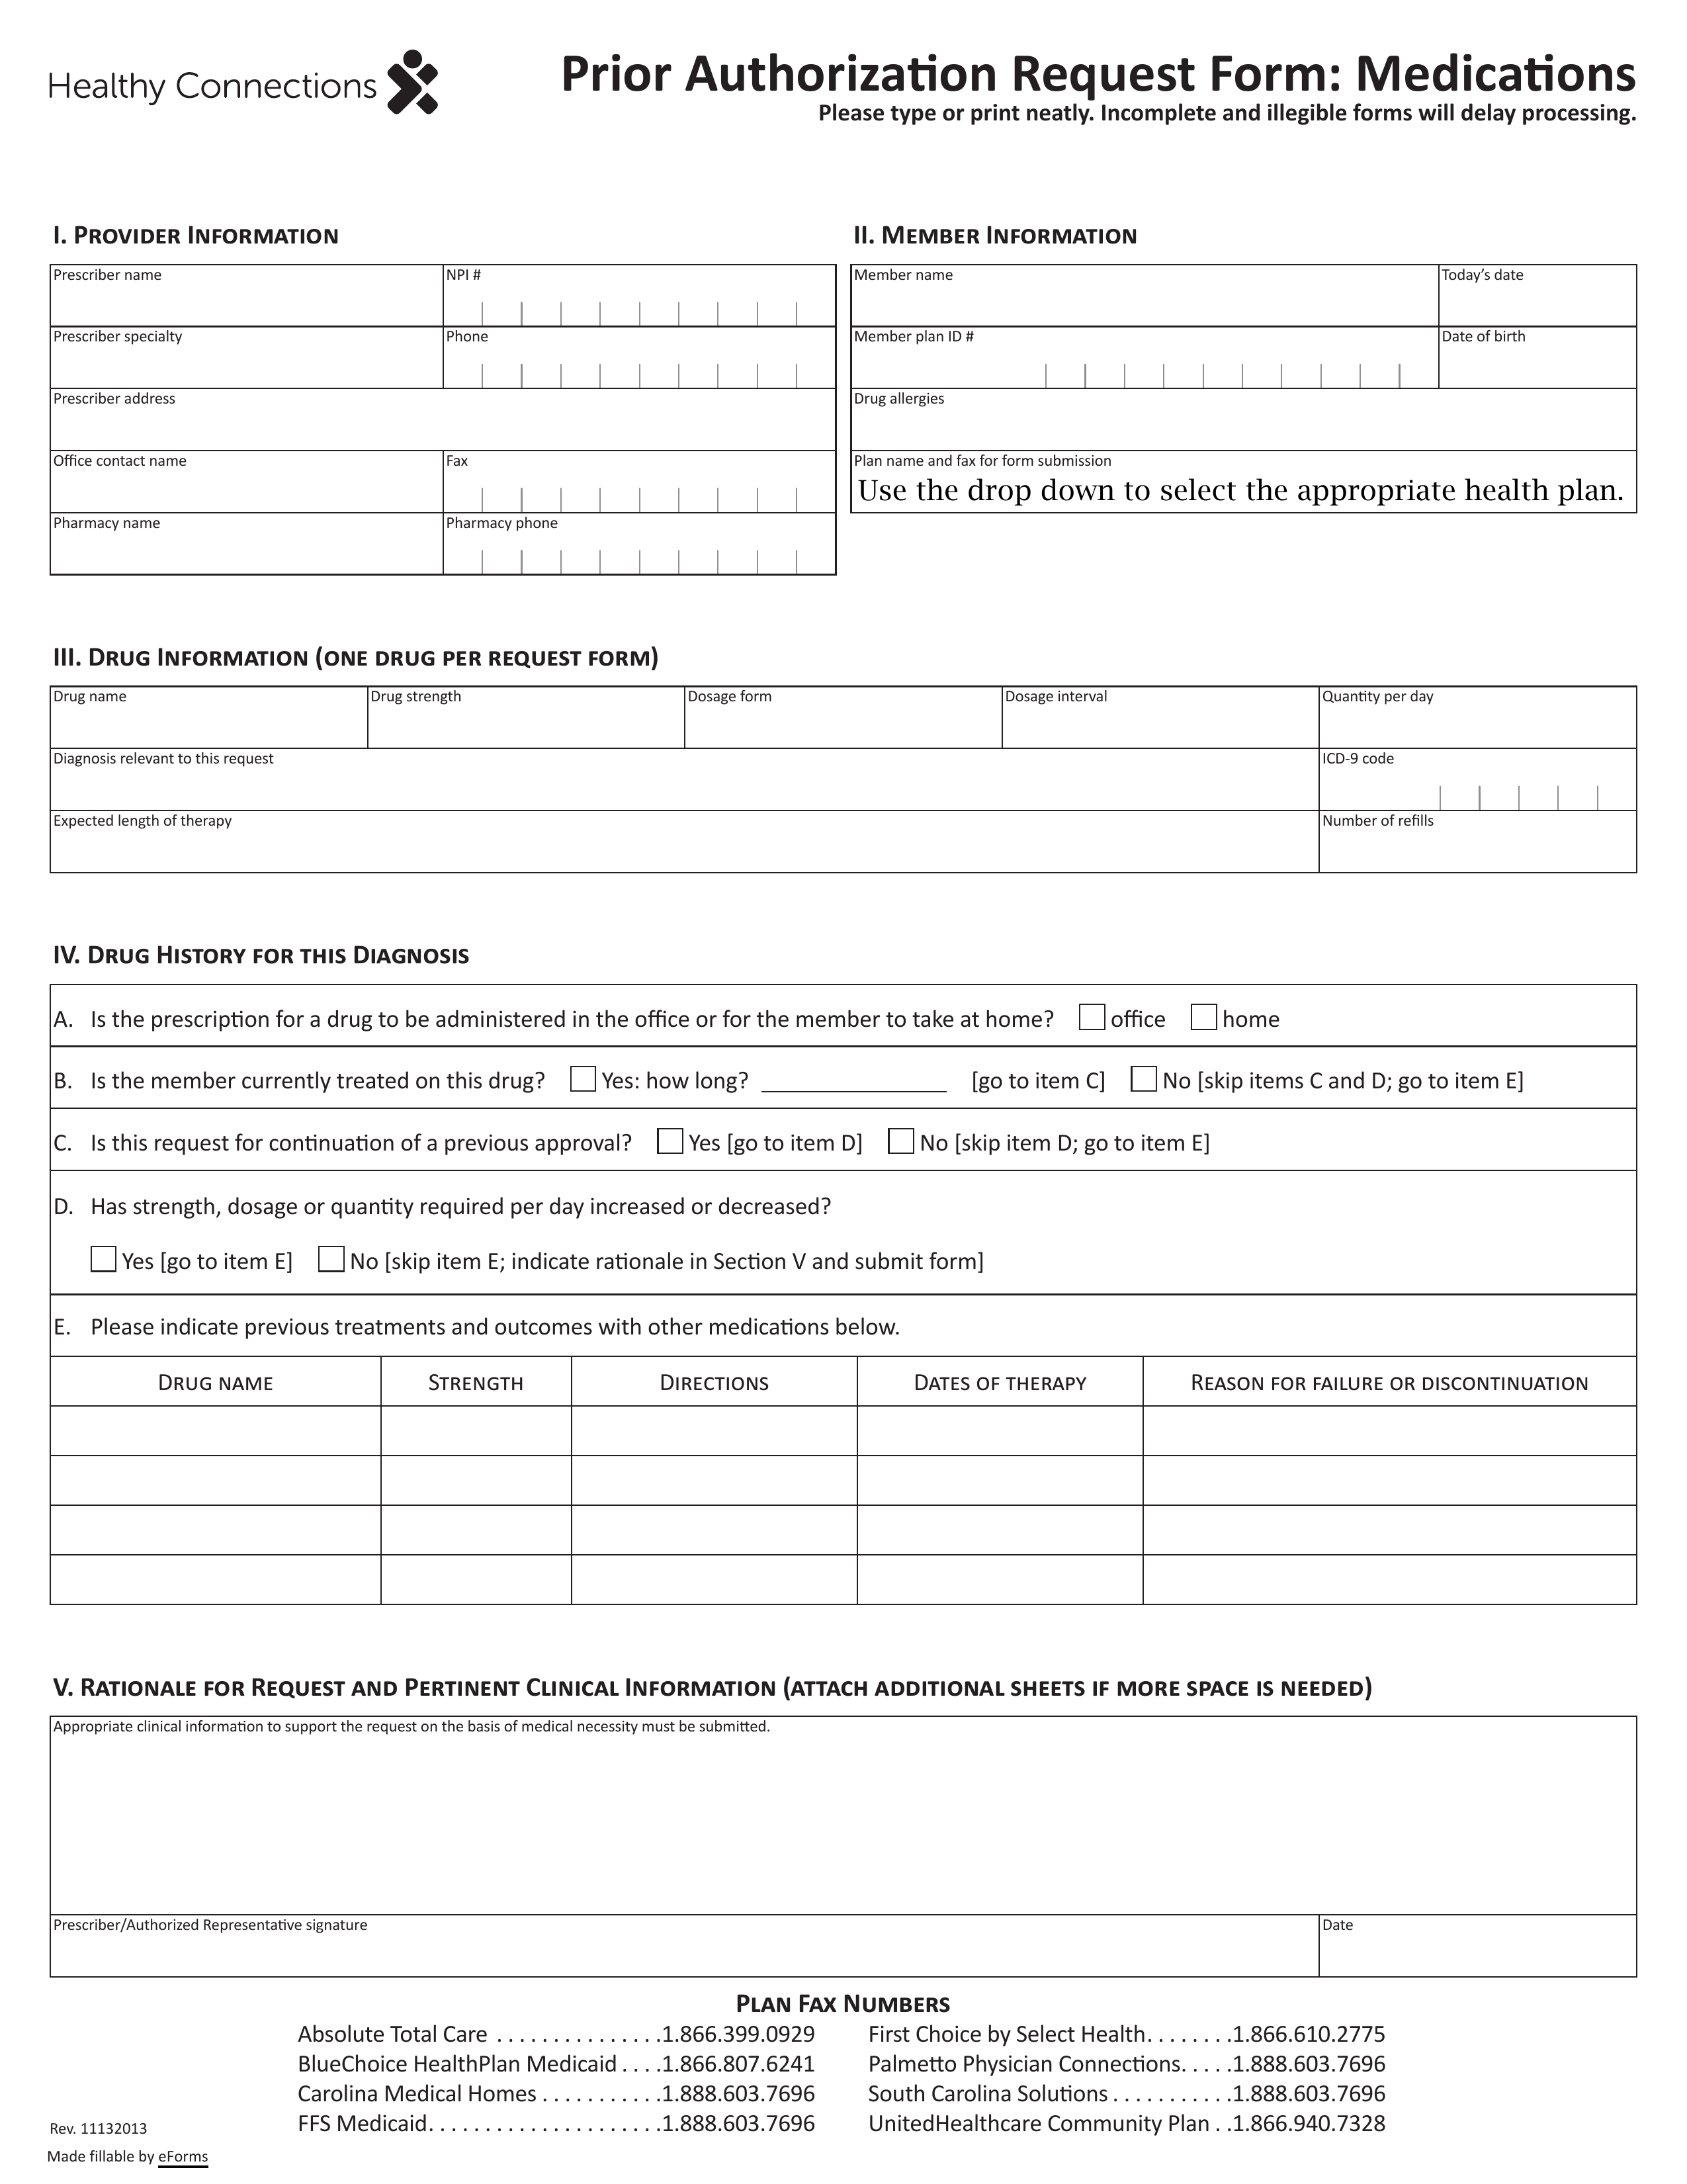 free-selecthealth-prior-rx-authorization-form-pdf-eforms